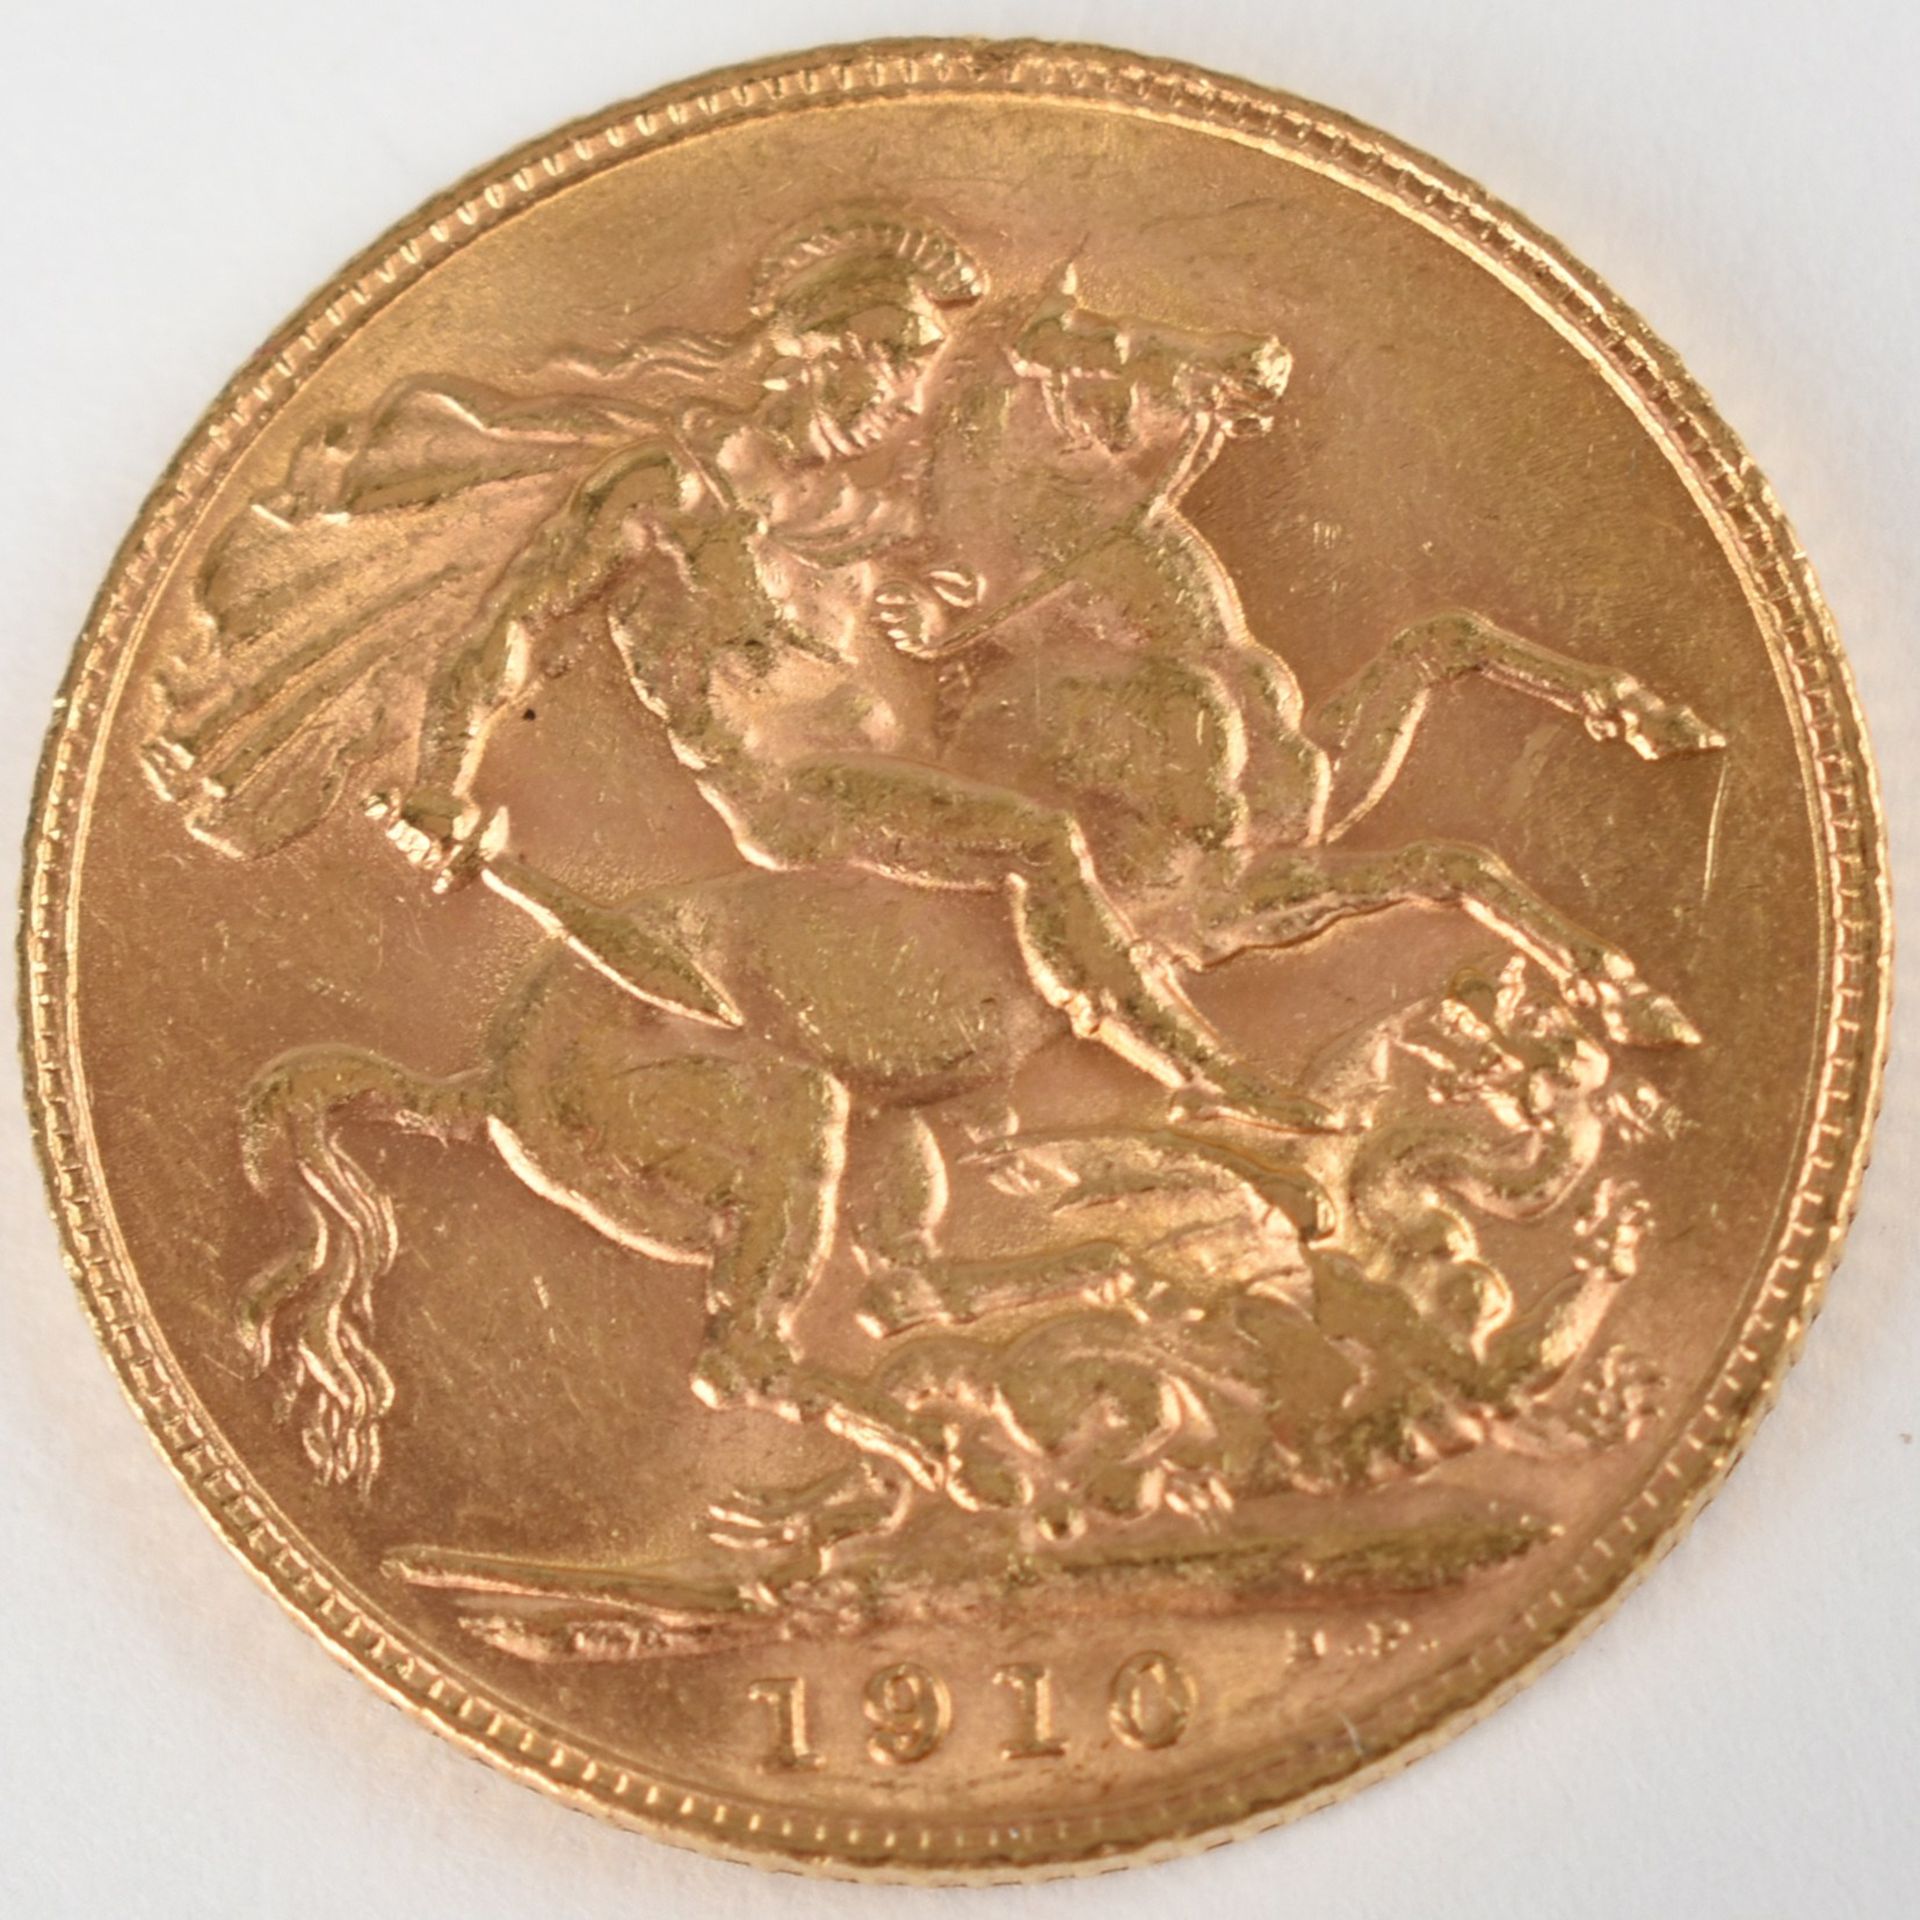 Goldmünze Großbritannien 1910 Sovereign in Gold, 916/1000, 7,988 g, D ca. 22 mm, av. König George V. - Bild 2 aus 3